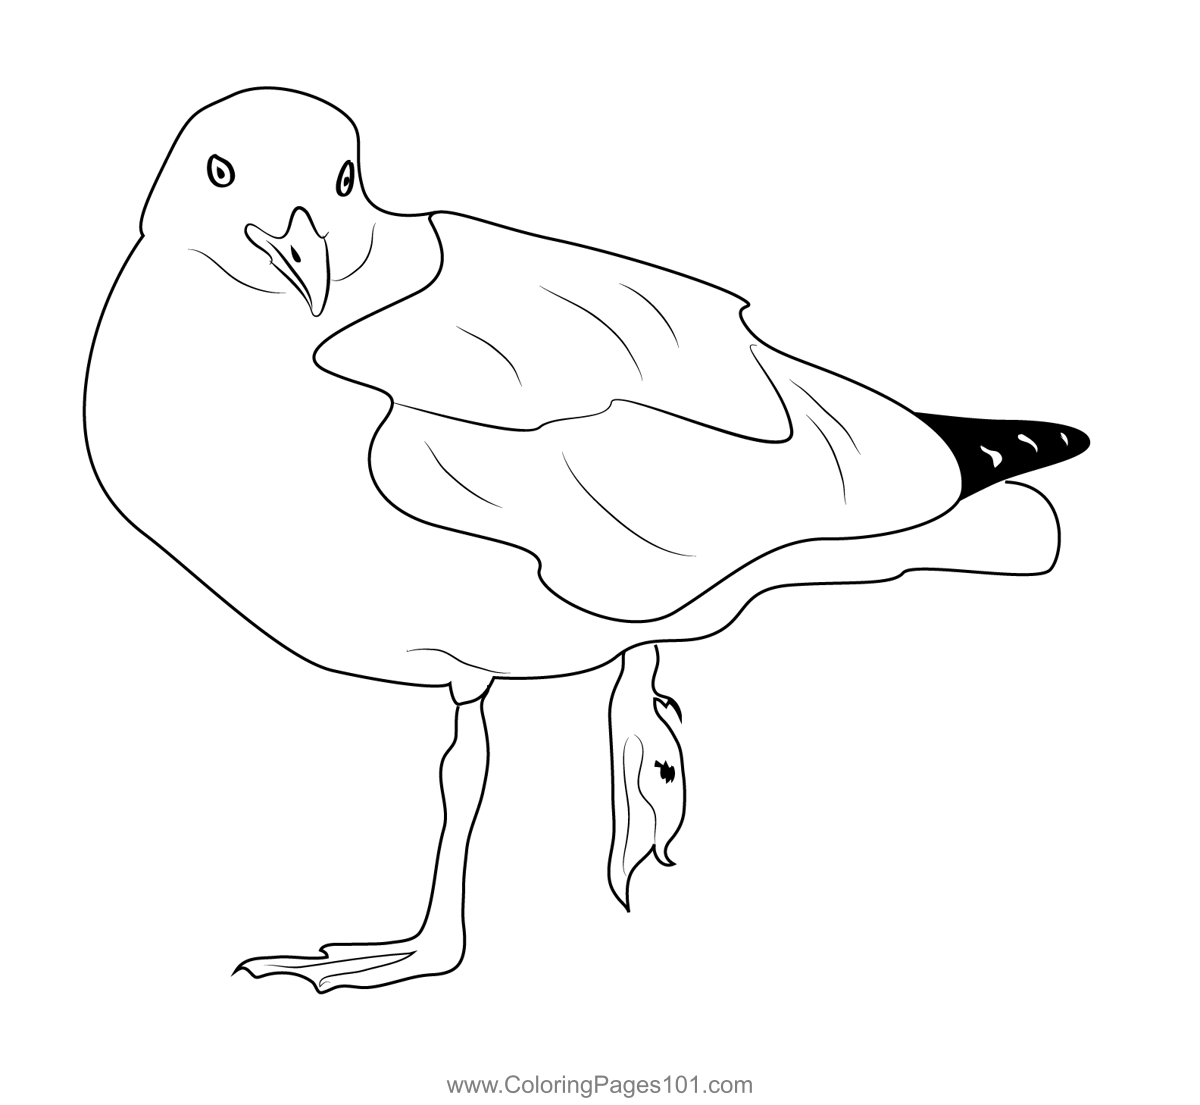 A Seagull With A Broken Leg